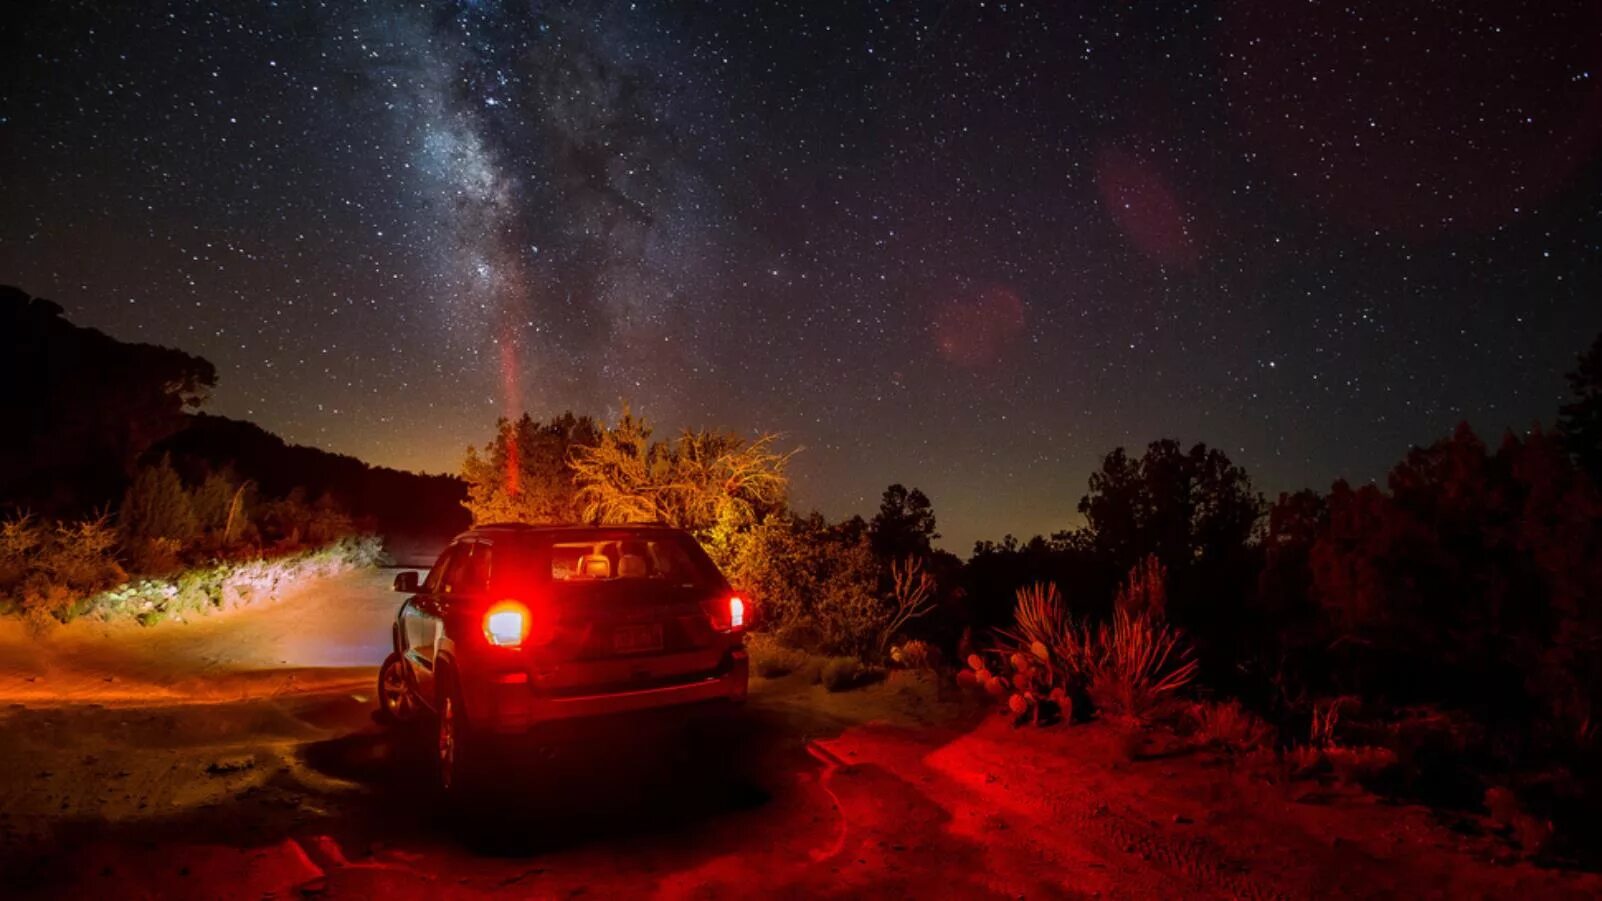 Машина ночью. Машина ночью на дороге. Машина в лесу ночью. Машина на фоне звездного неба. Сида ночь